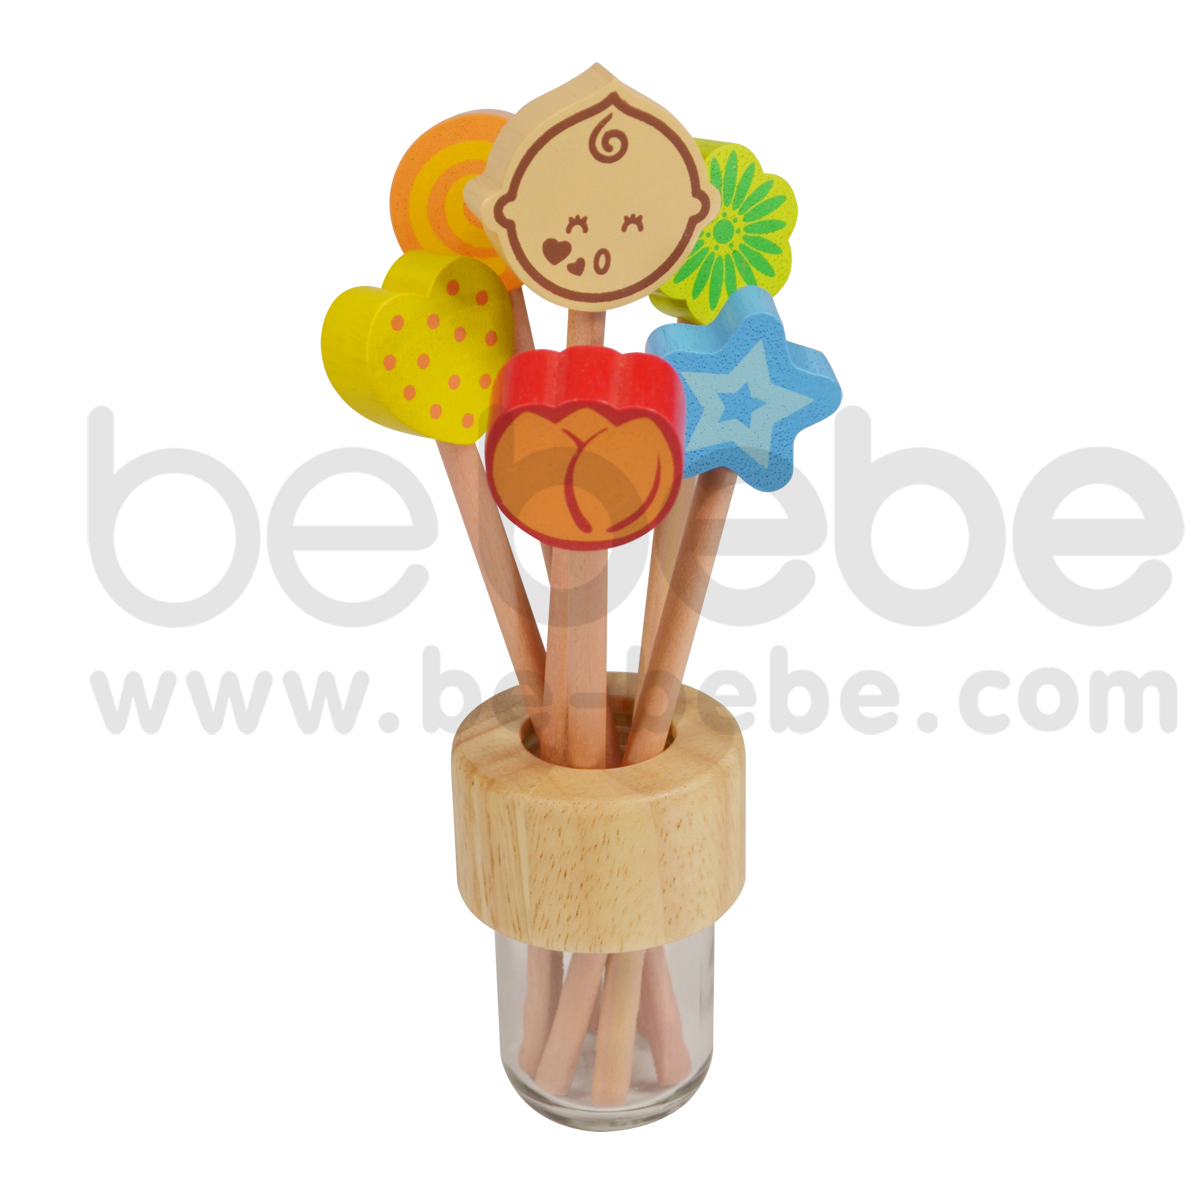 bebebe : ดินสอS ดอกทิวลิป/ม่วง